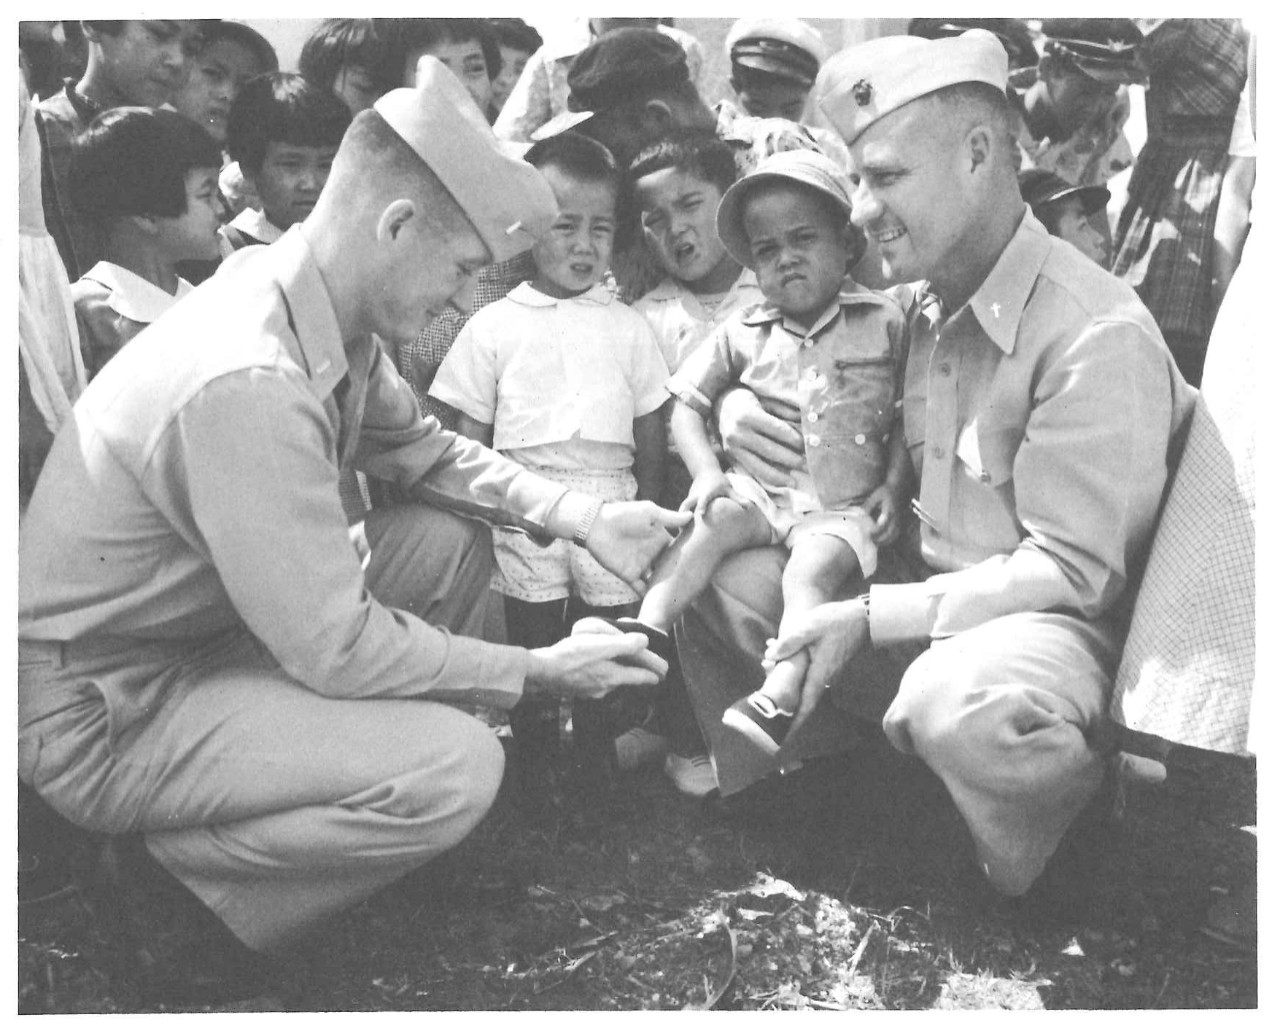 Two Navy men with children